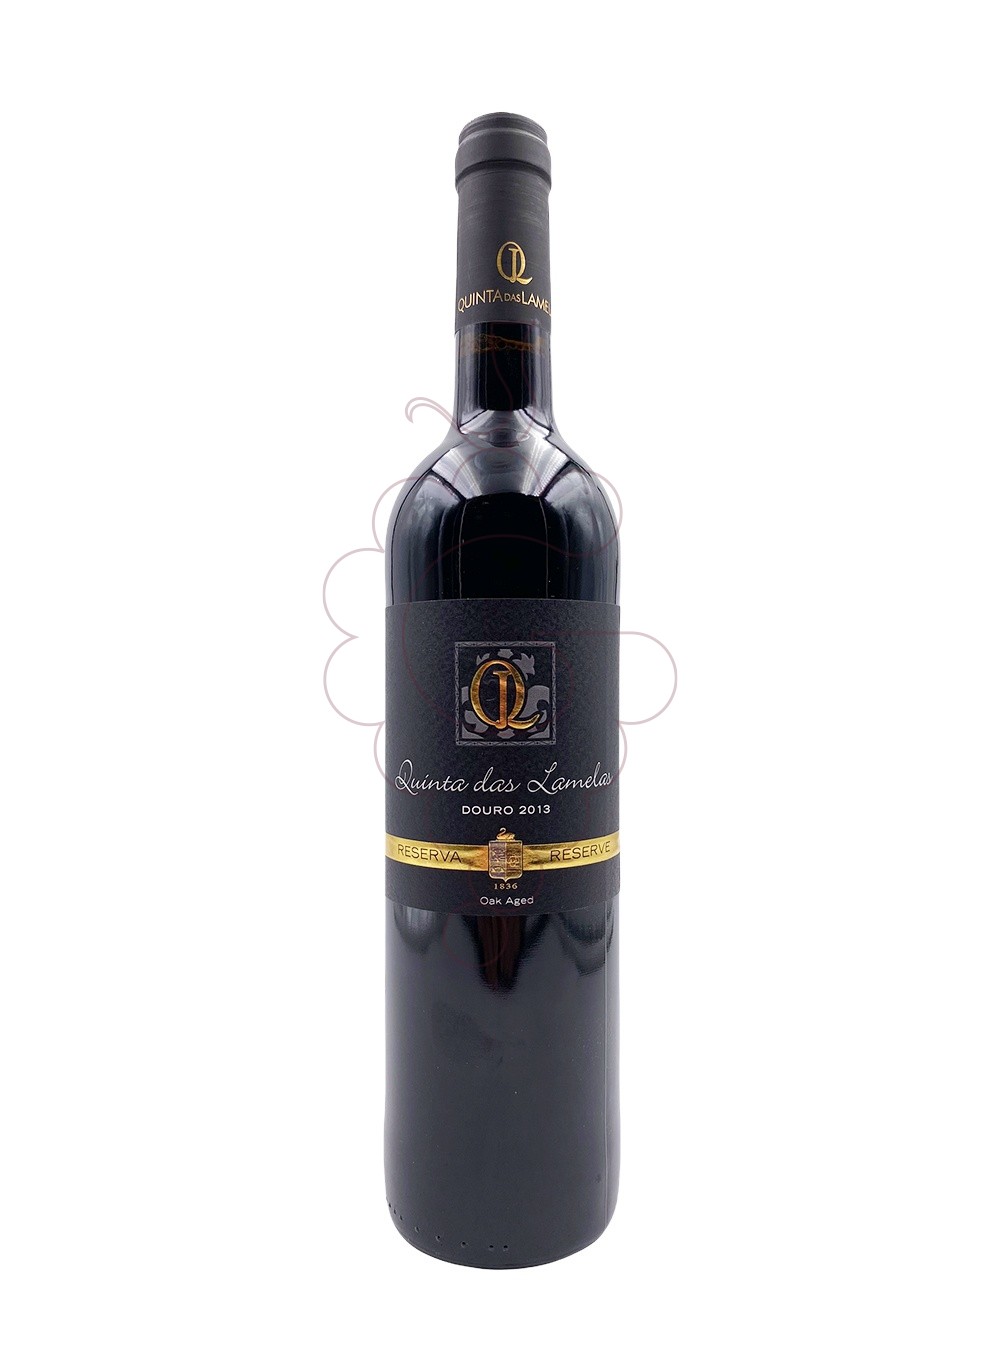 Foto Quinta das lamelas reser.13 vi negre